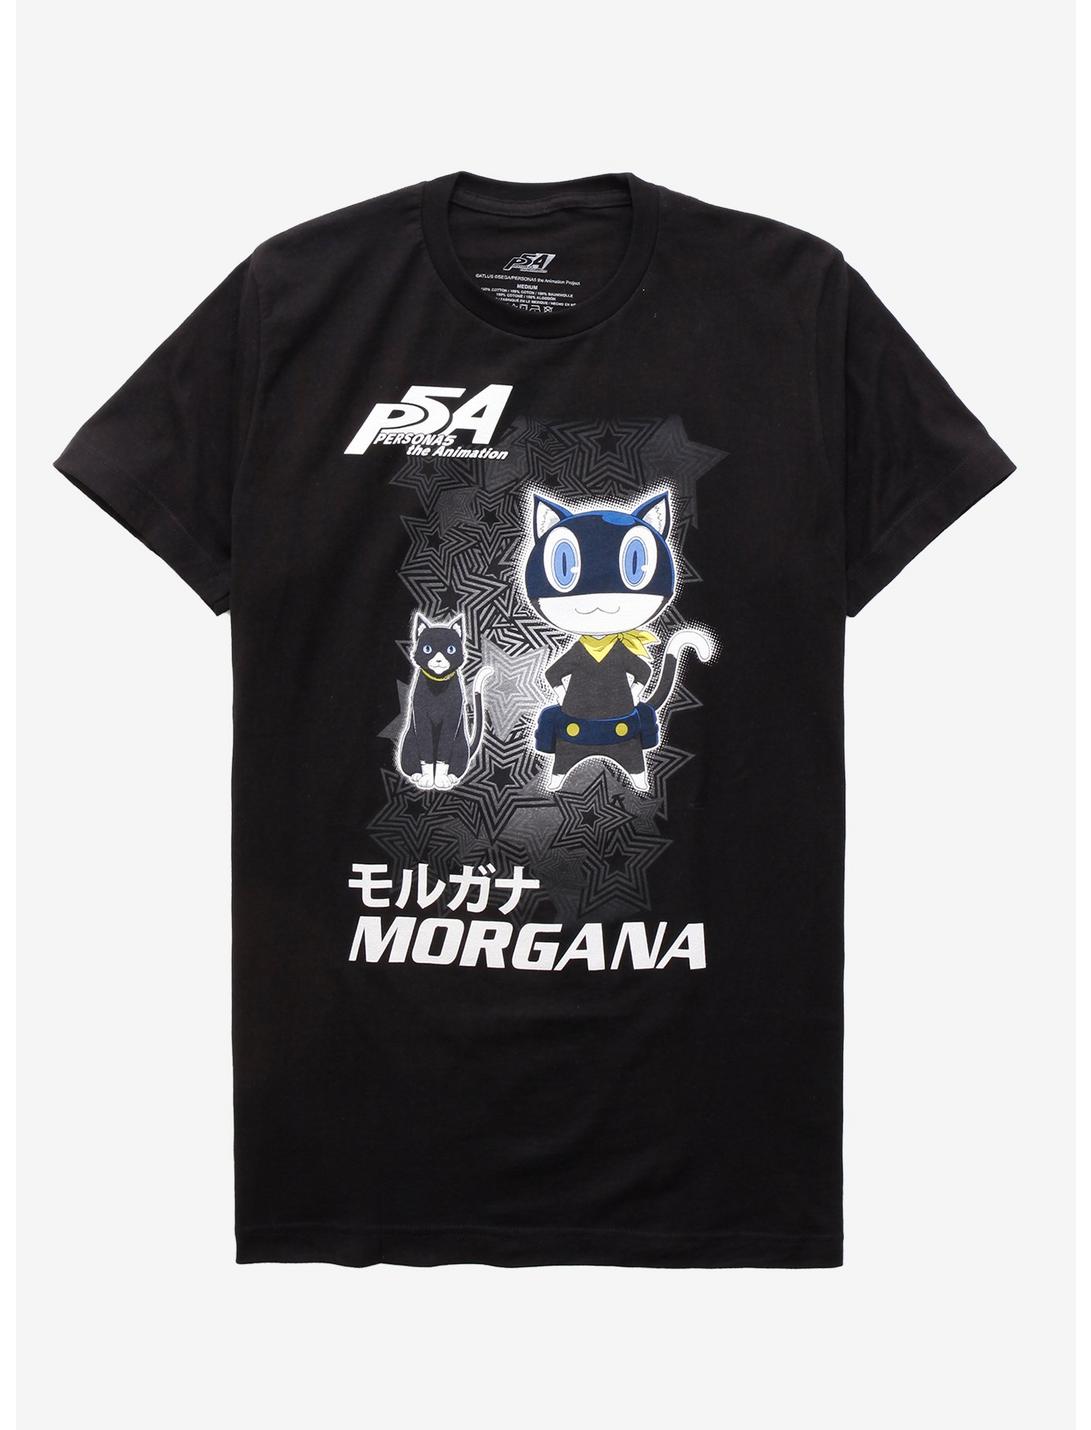 Persona 5: The Animation Morgana T-Shirt, BLACK, hi-res